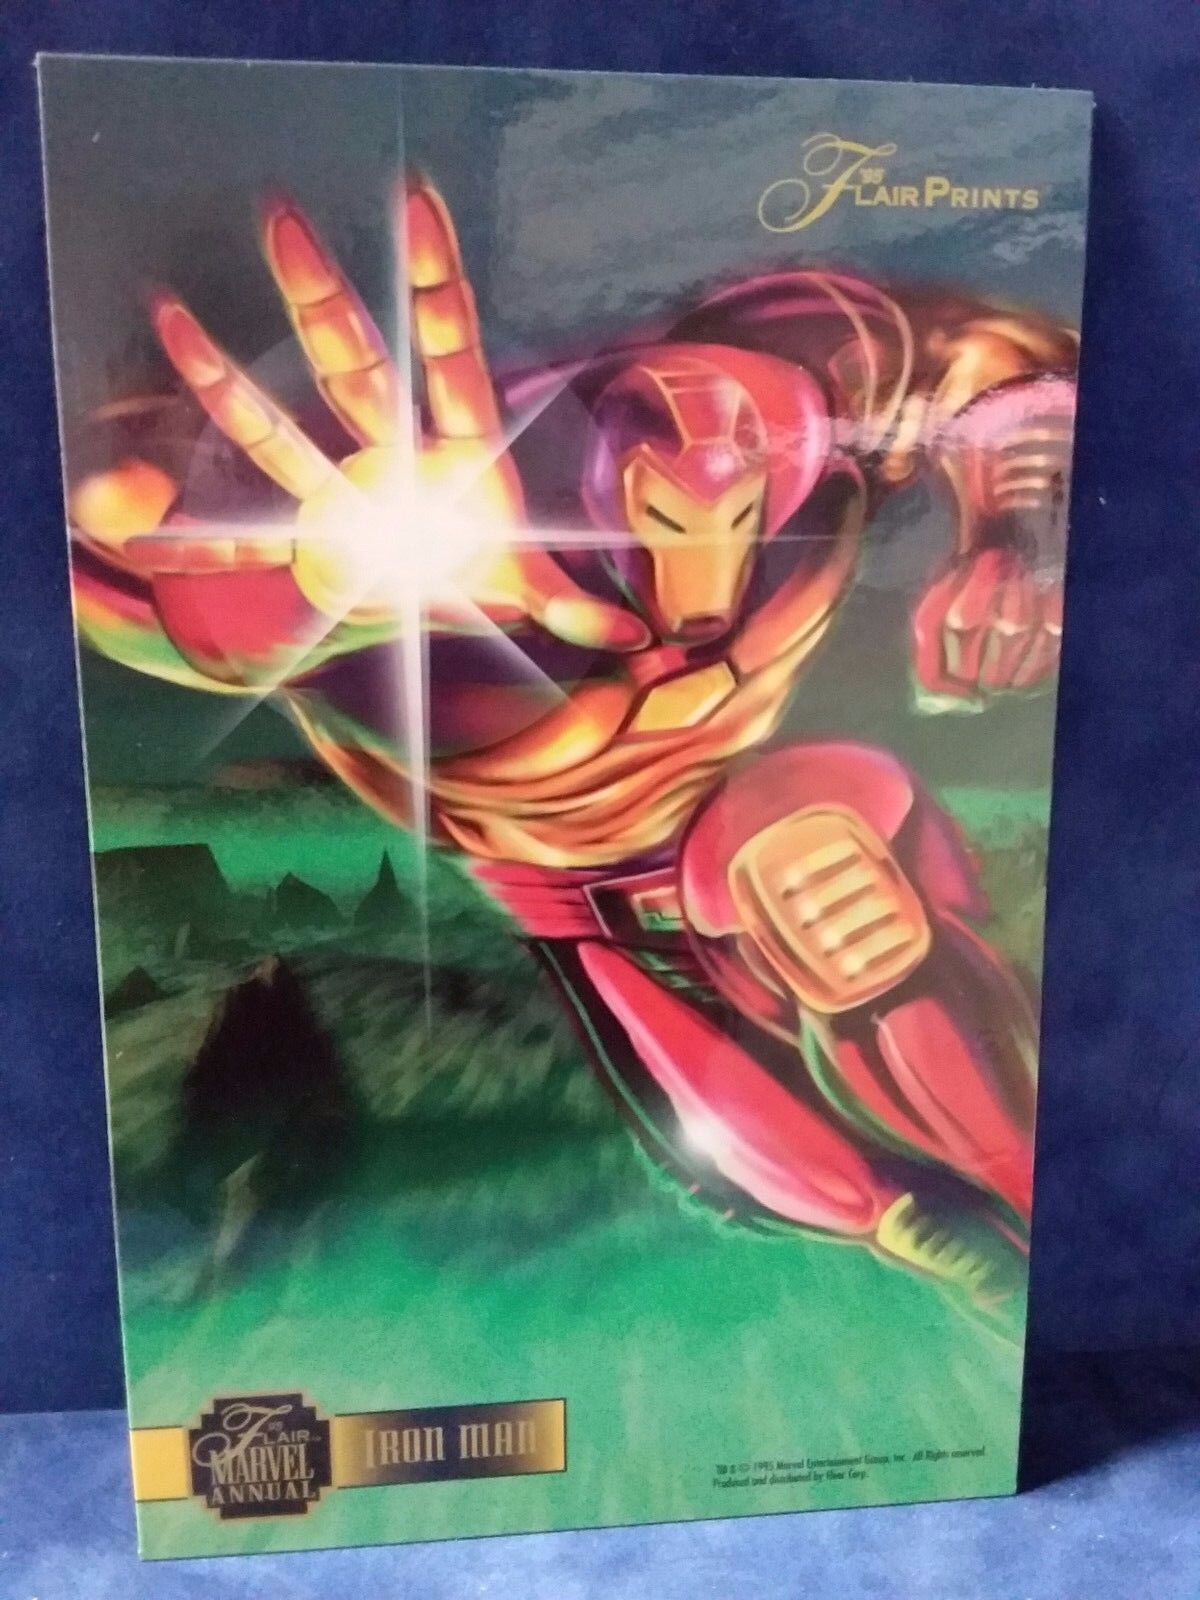 1995 Flair Marvel Annual IRON MAN 6 1/2 x 10' Flair Prints Jumbo Card